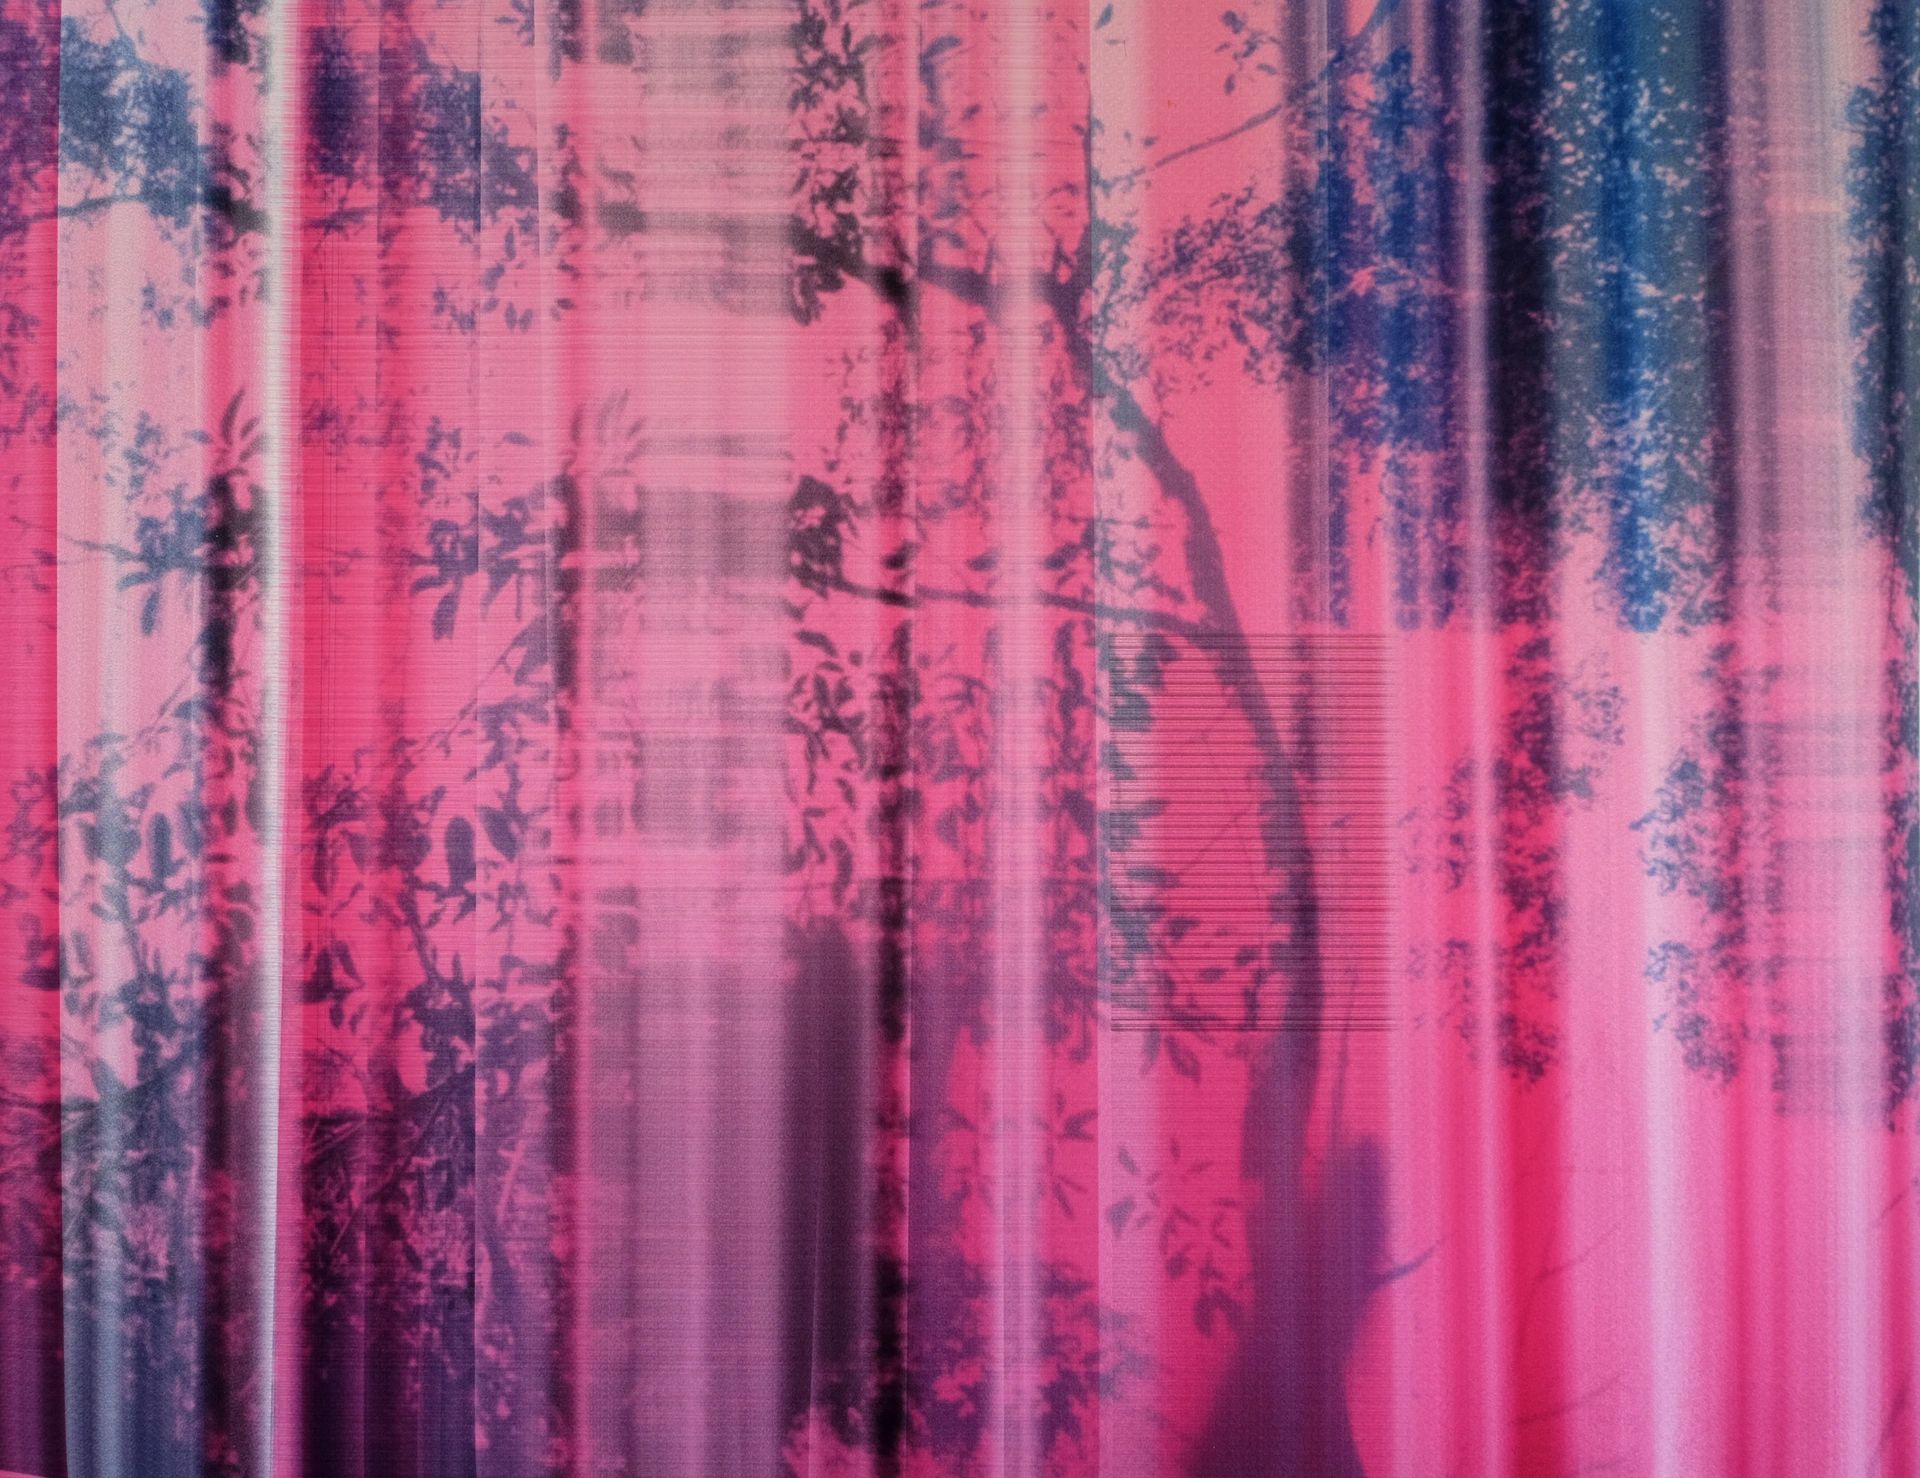 Digital Forest II 
Printer Manipulations, Digital Print on paper
44” x 57” + frame
1/1 – 2021